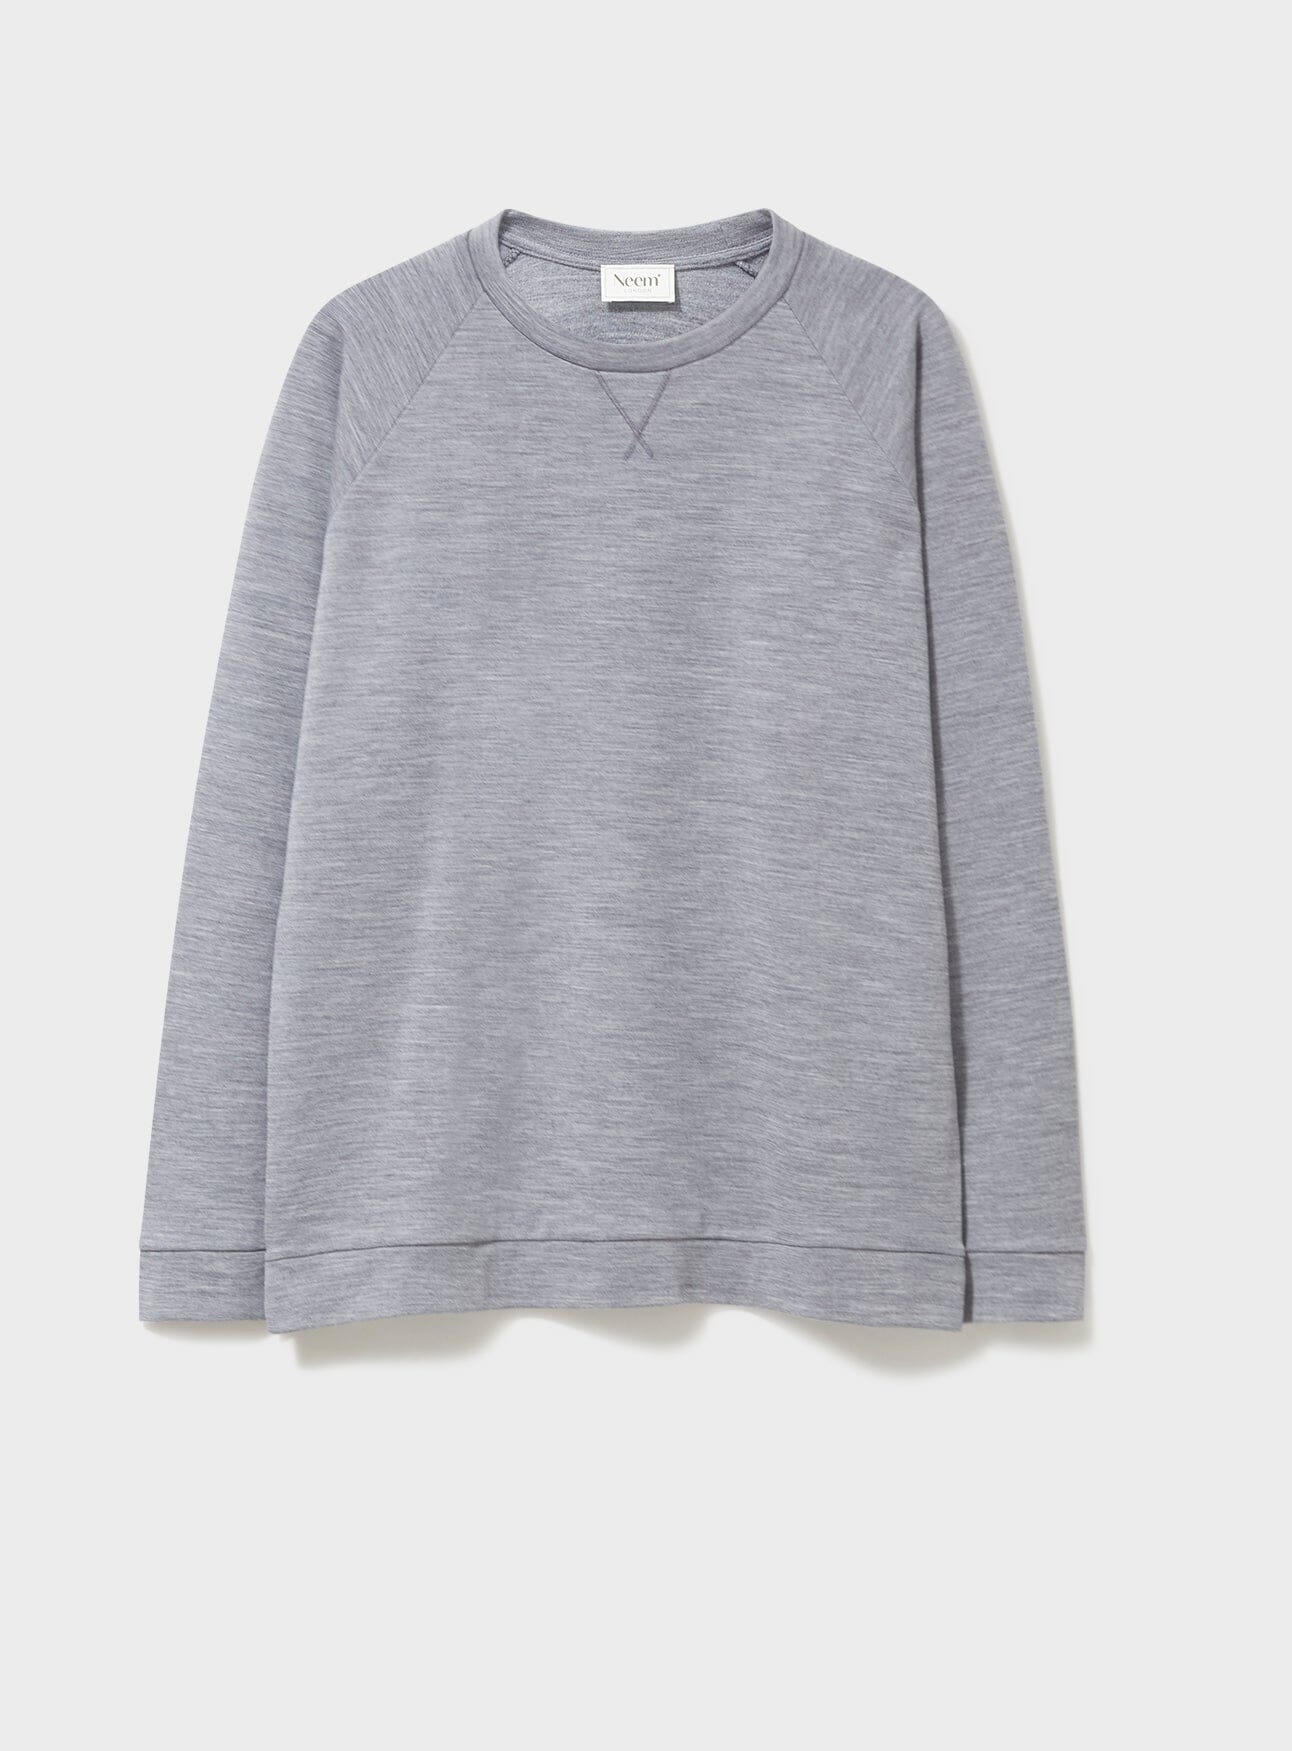 Grey overshirt